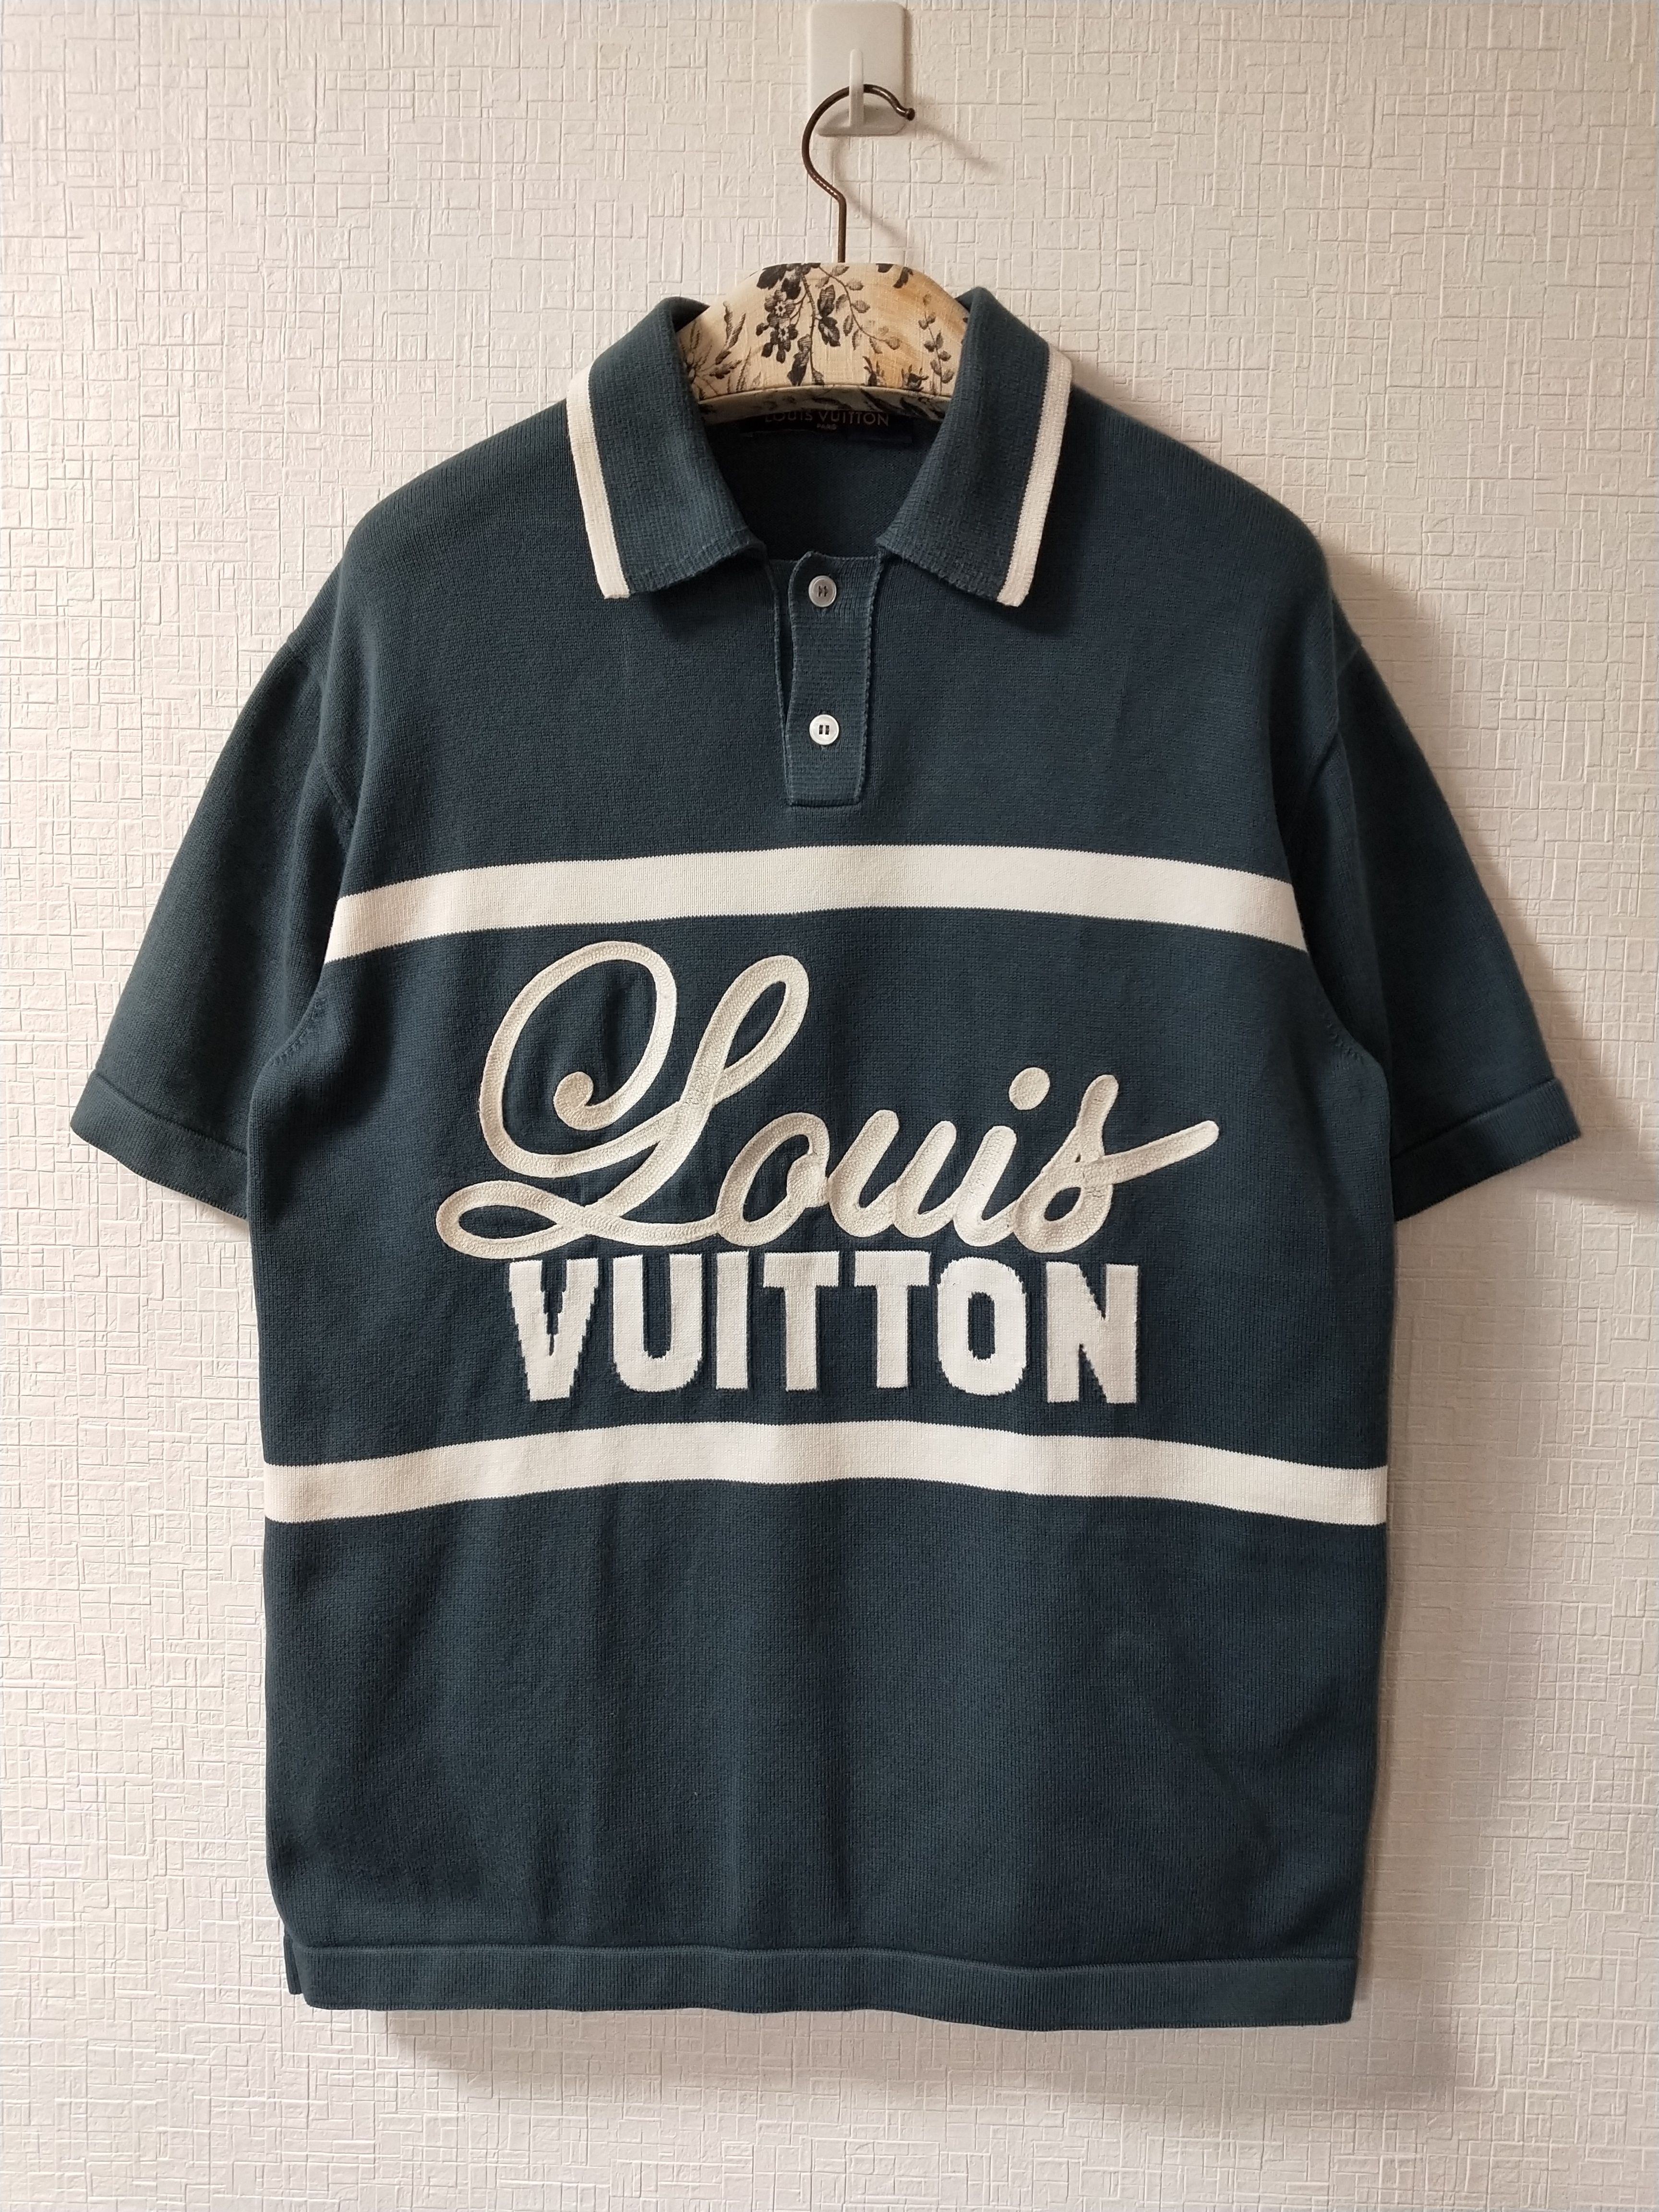 Louis Vuitton Louis Vuitton Vintage Cycling Polo, Blue, XXL